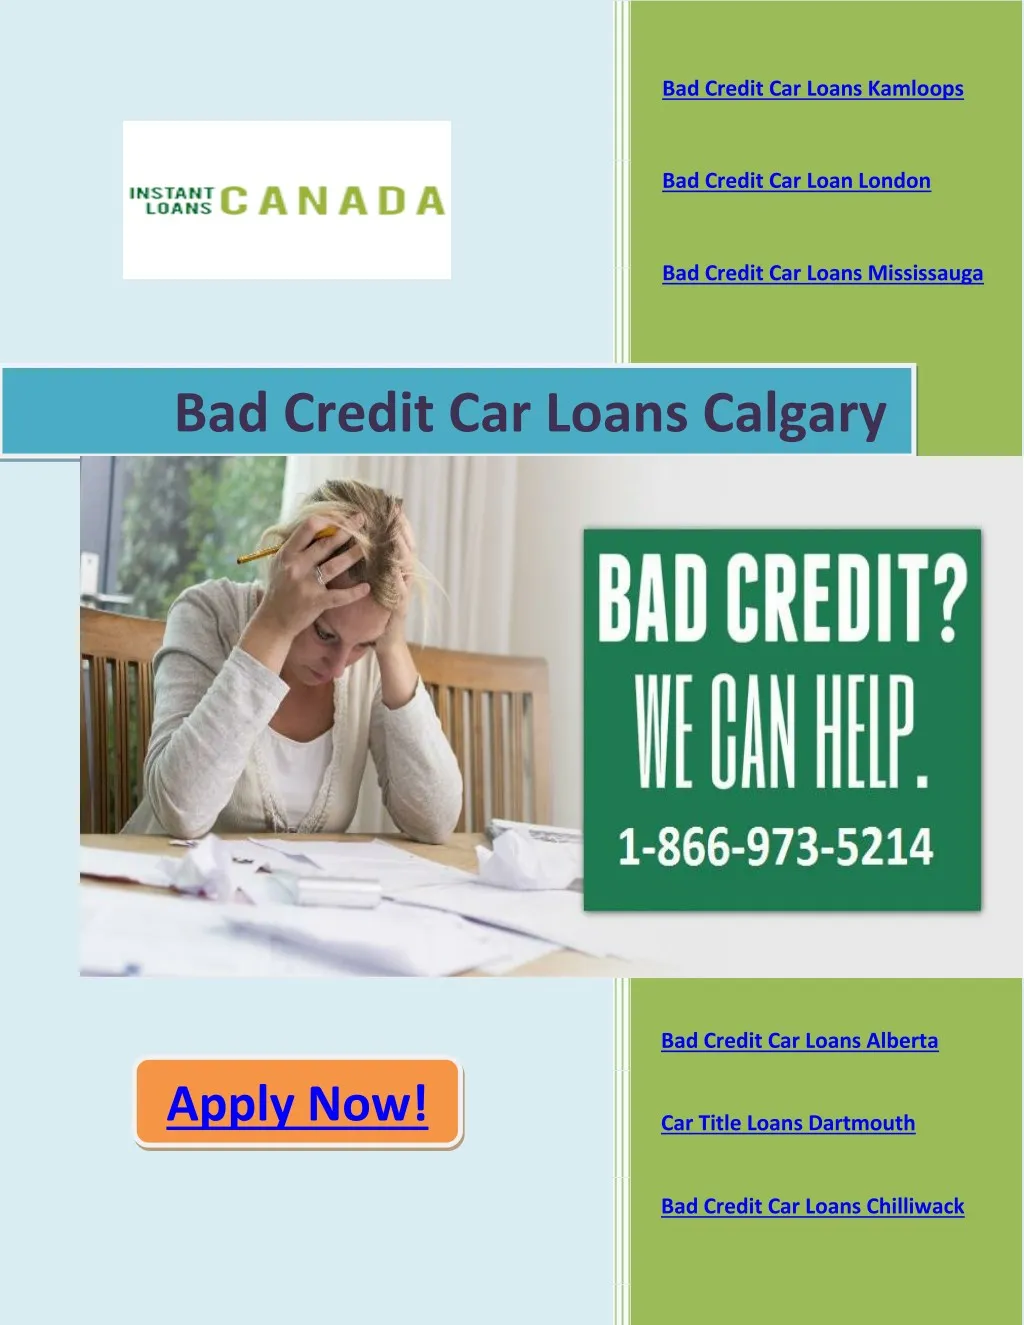 personal-loans-near-me-instant-easy-loans-even-poor-credit-score